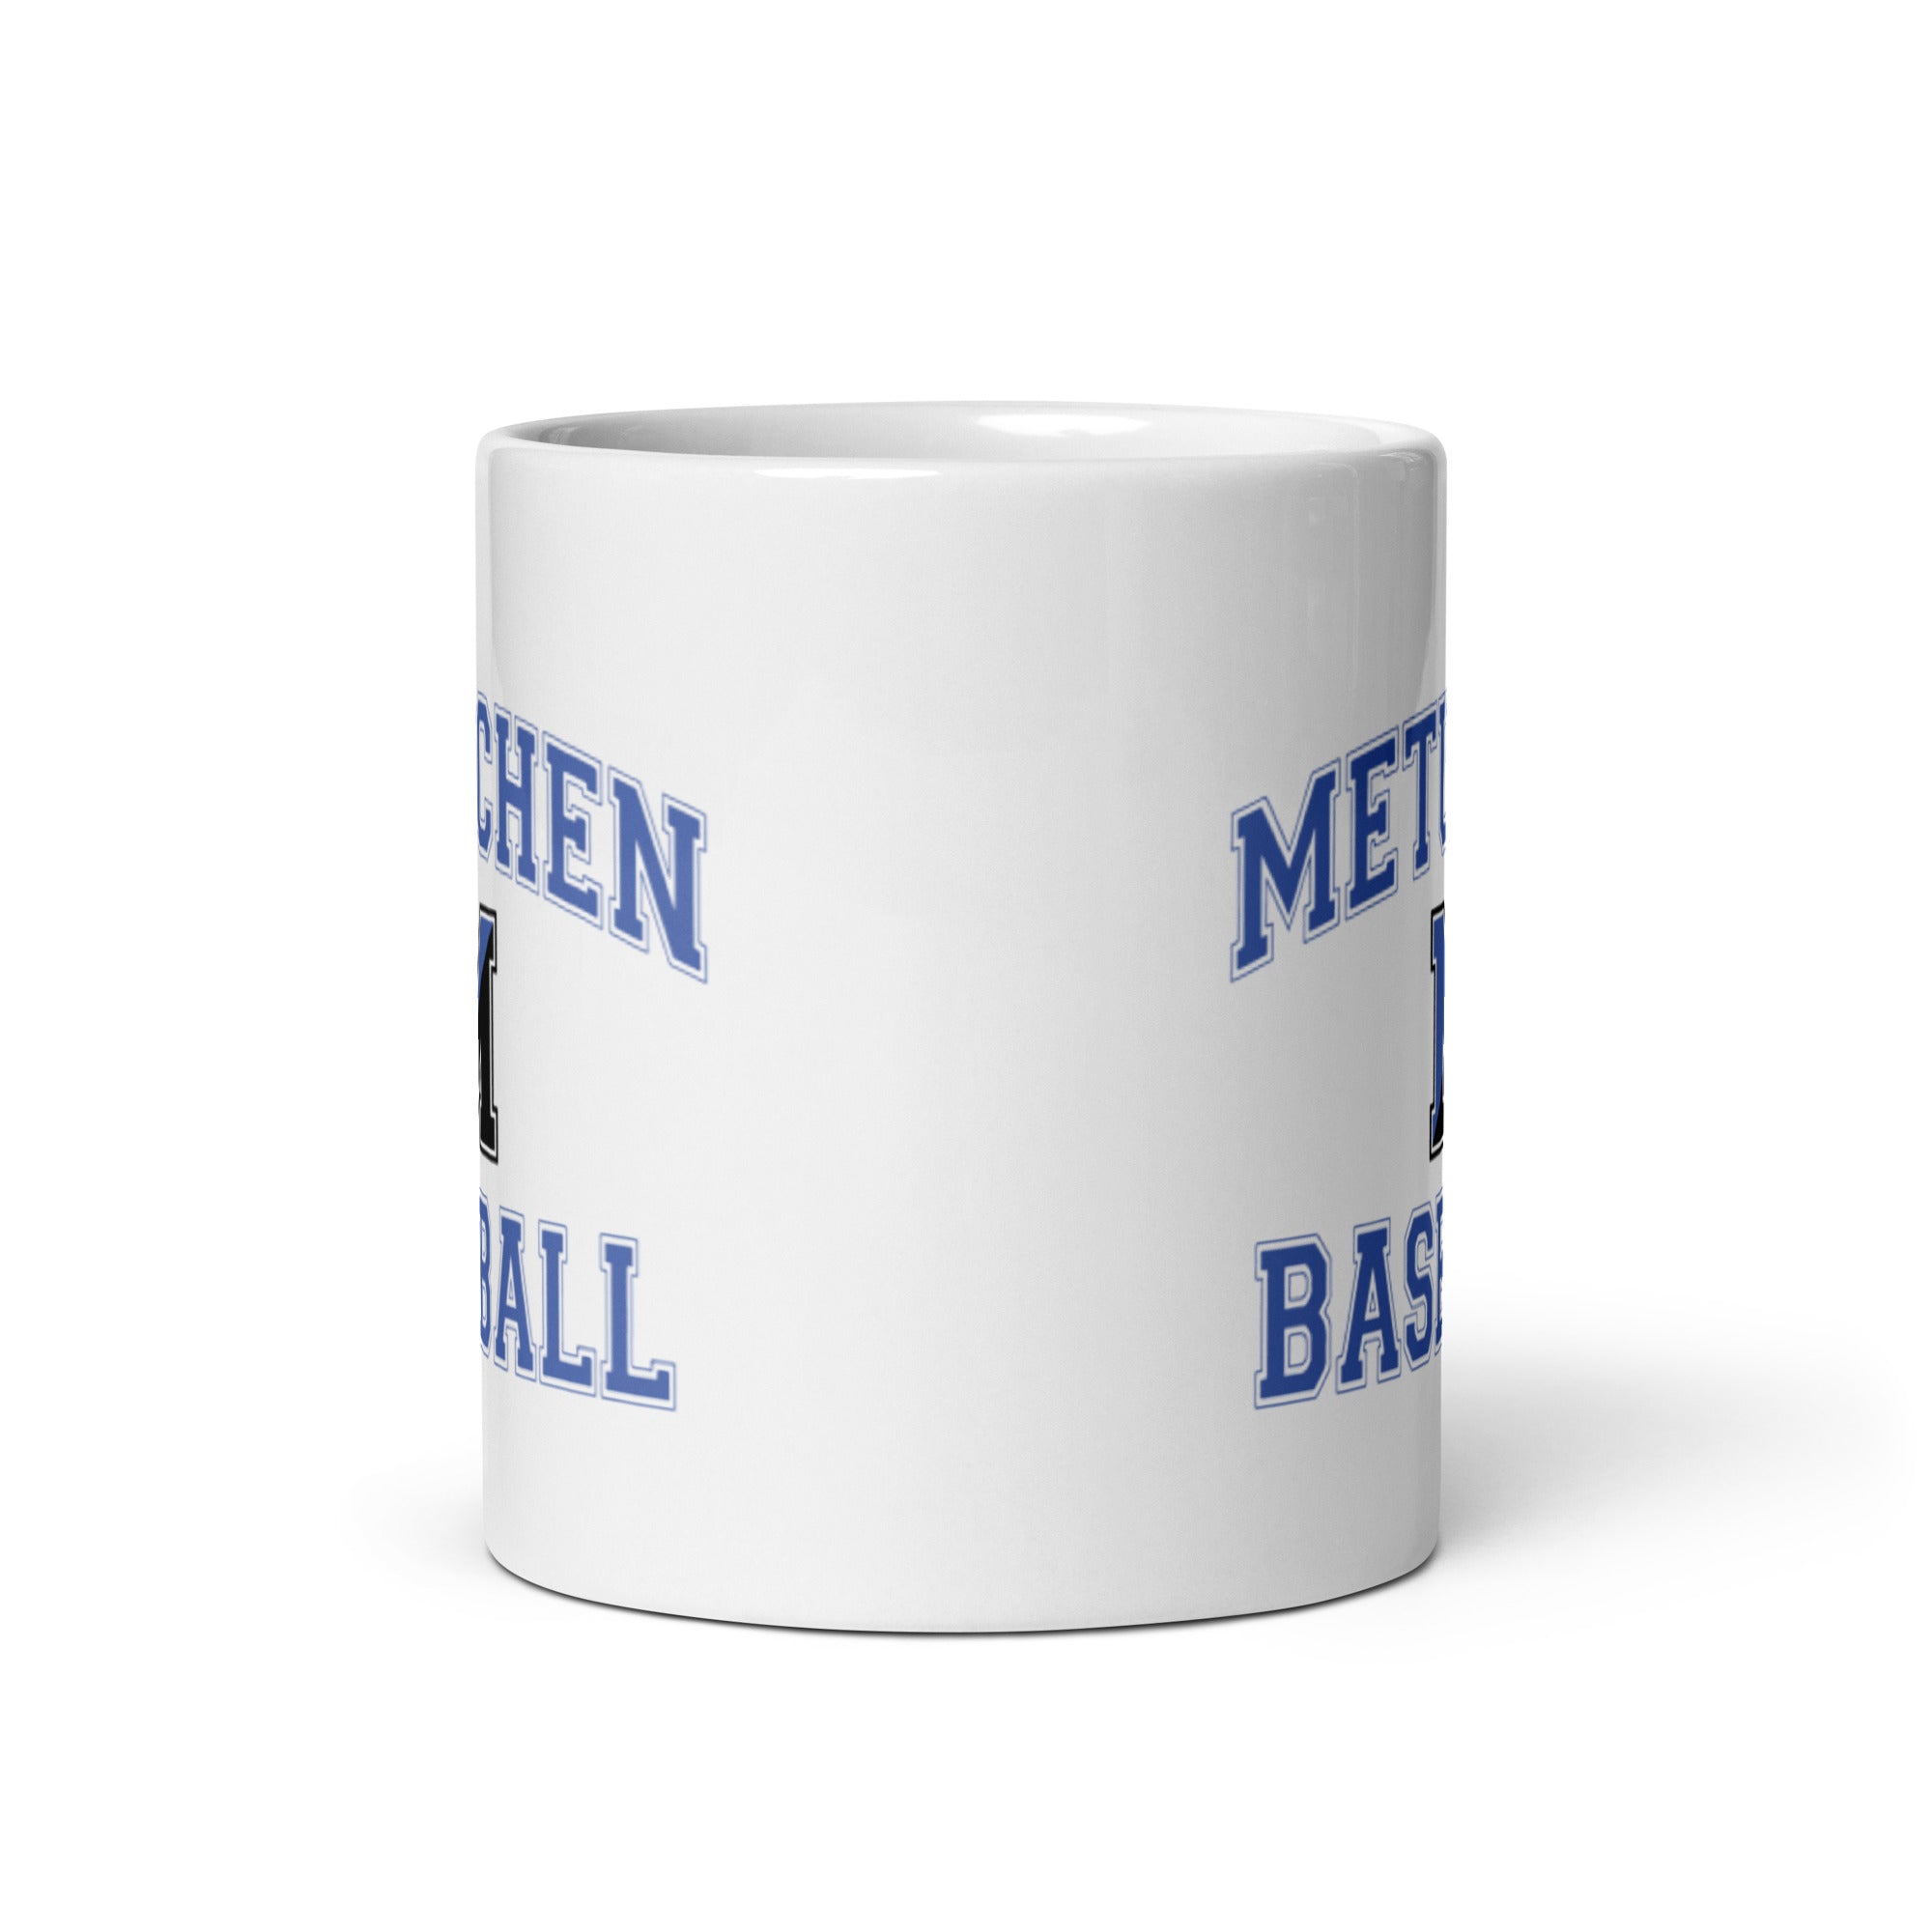 MB White glossy mug